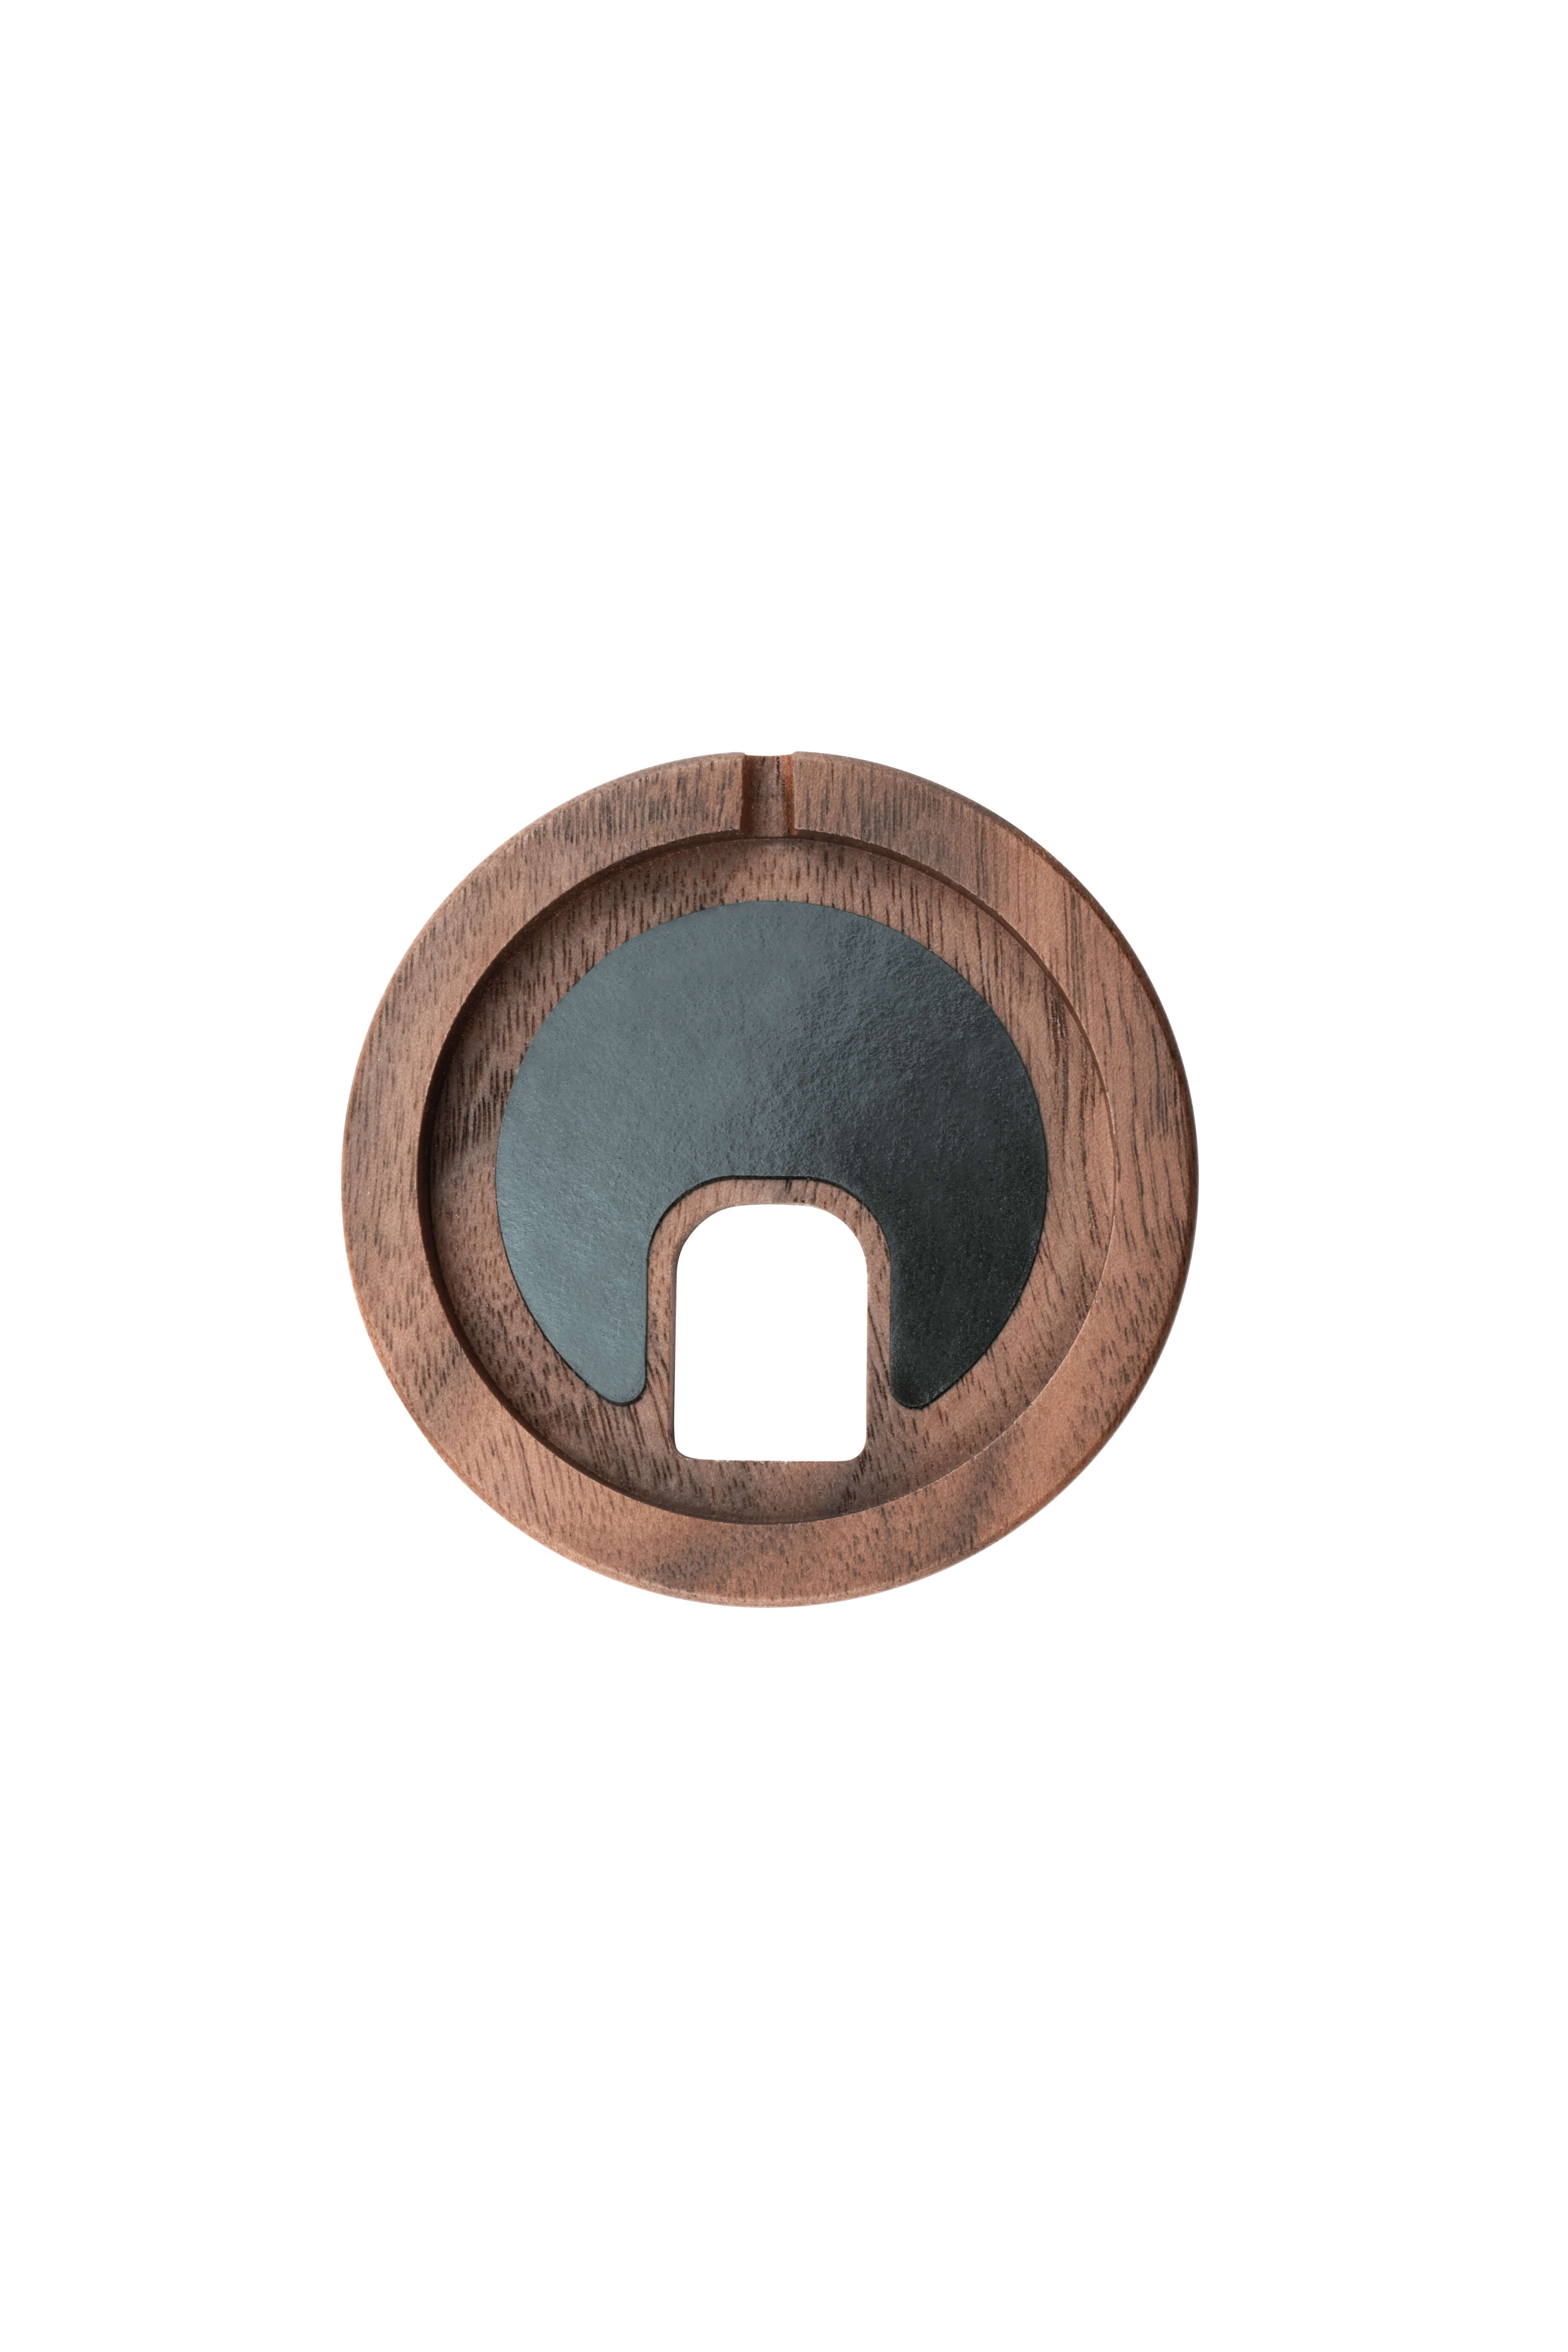 BALOLO Mag Puck Holzhalter für Apple MagSafe